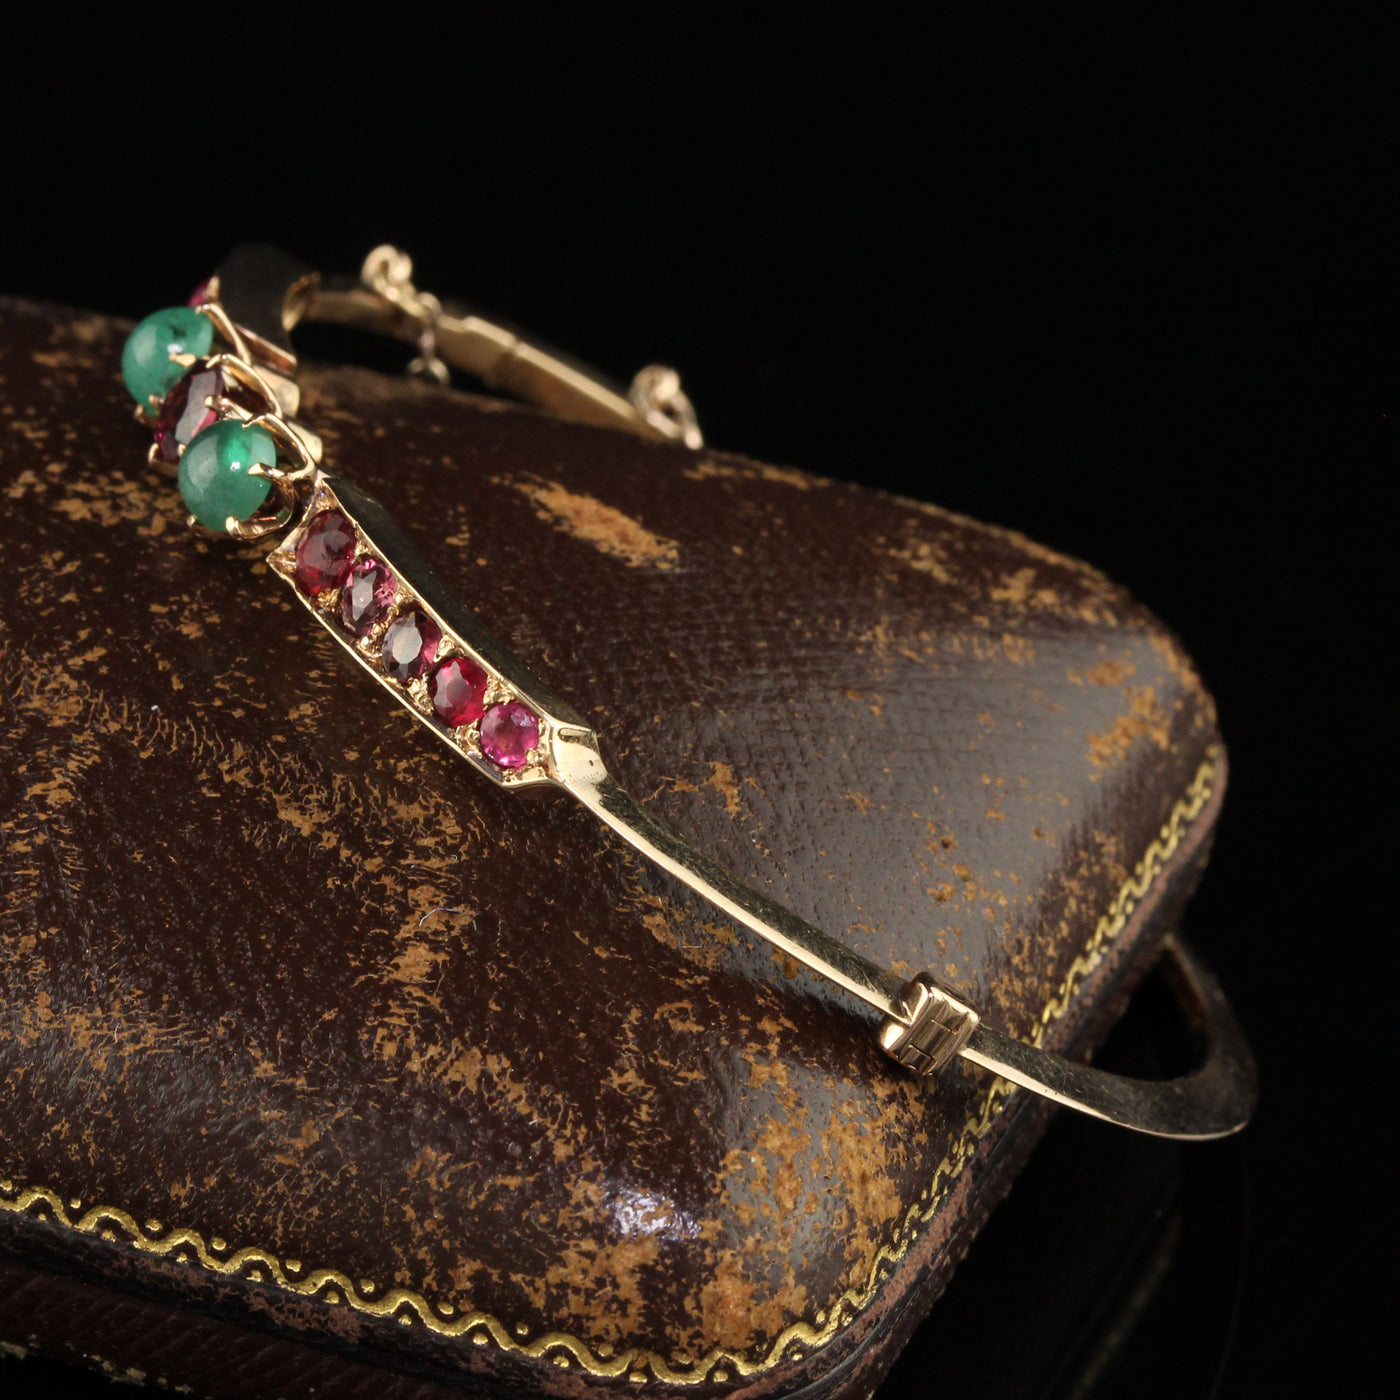 Antique Victorian 15K Yellow Gold Garnet and Emerald Bangle Bracelet